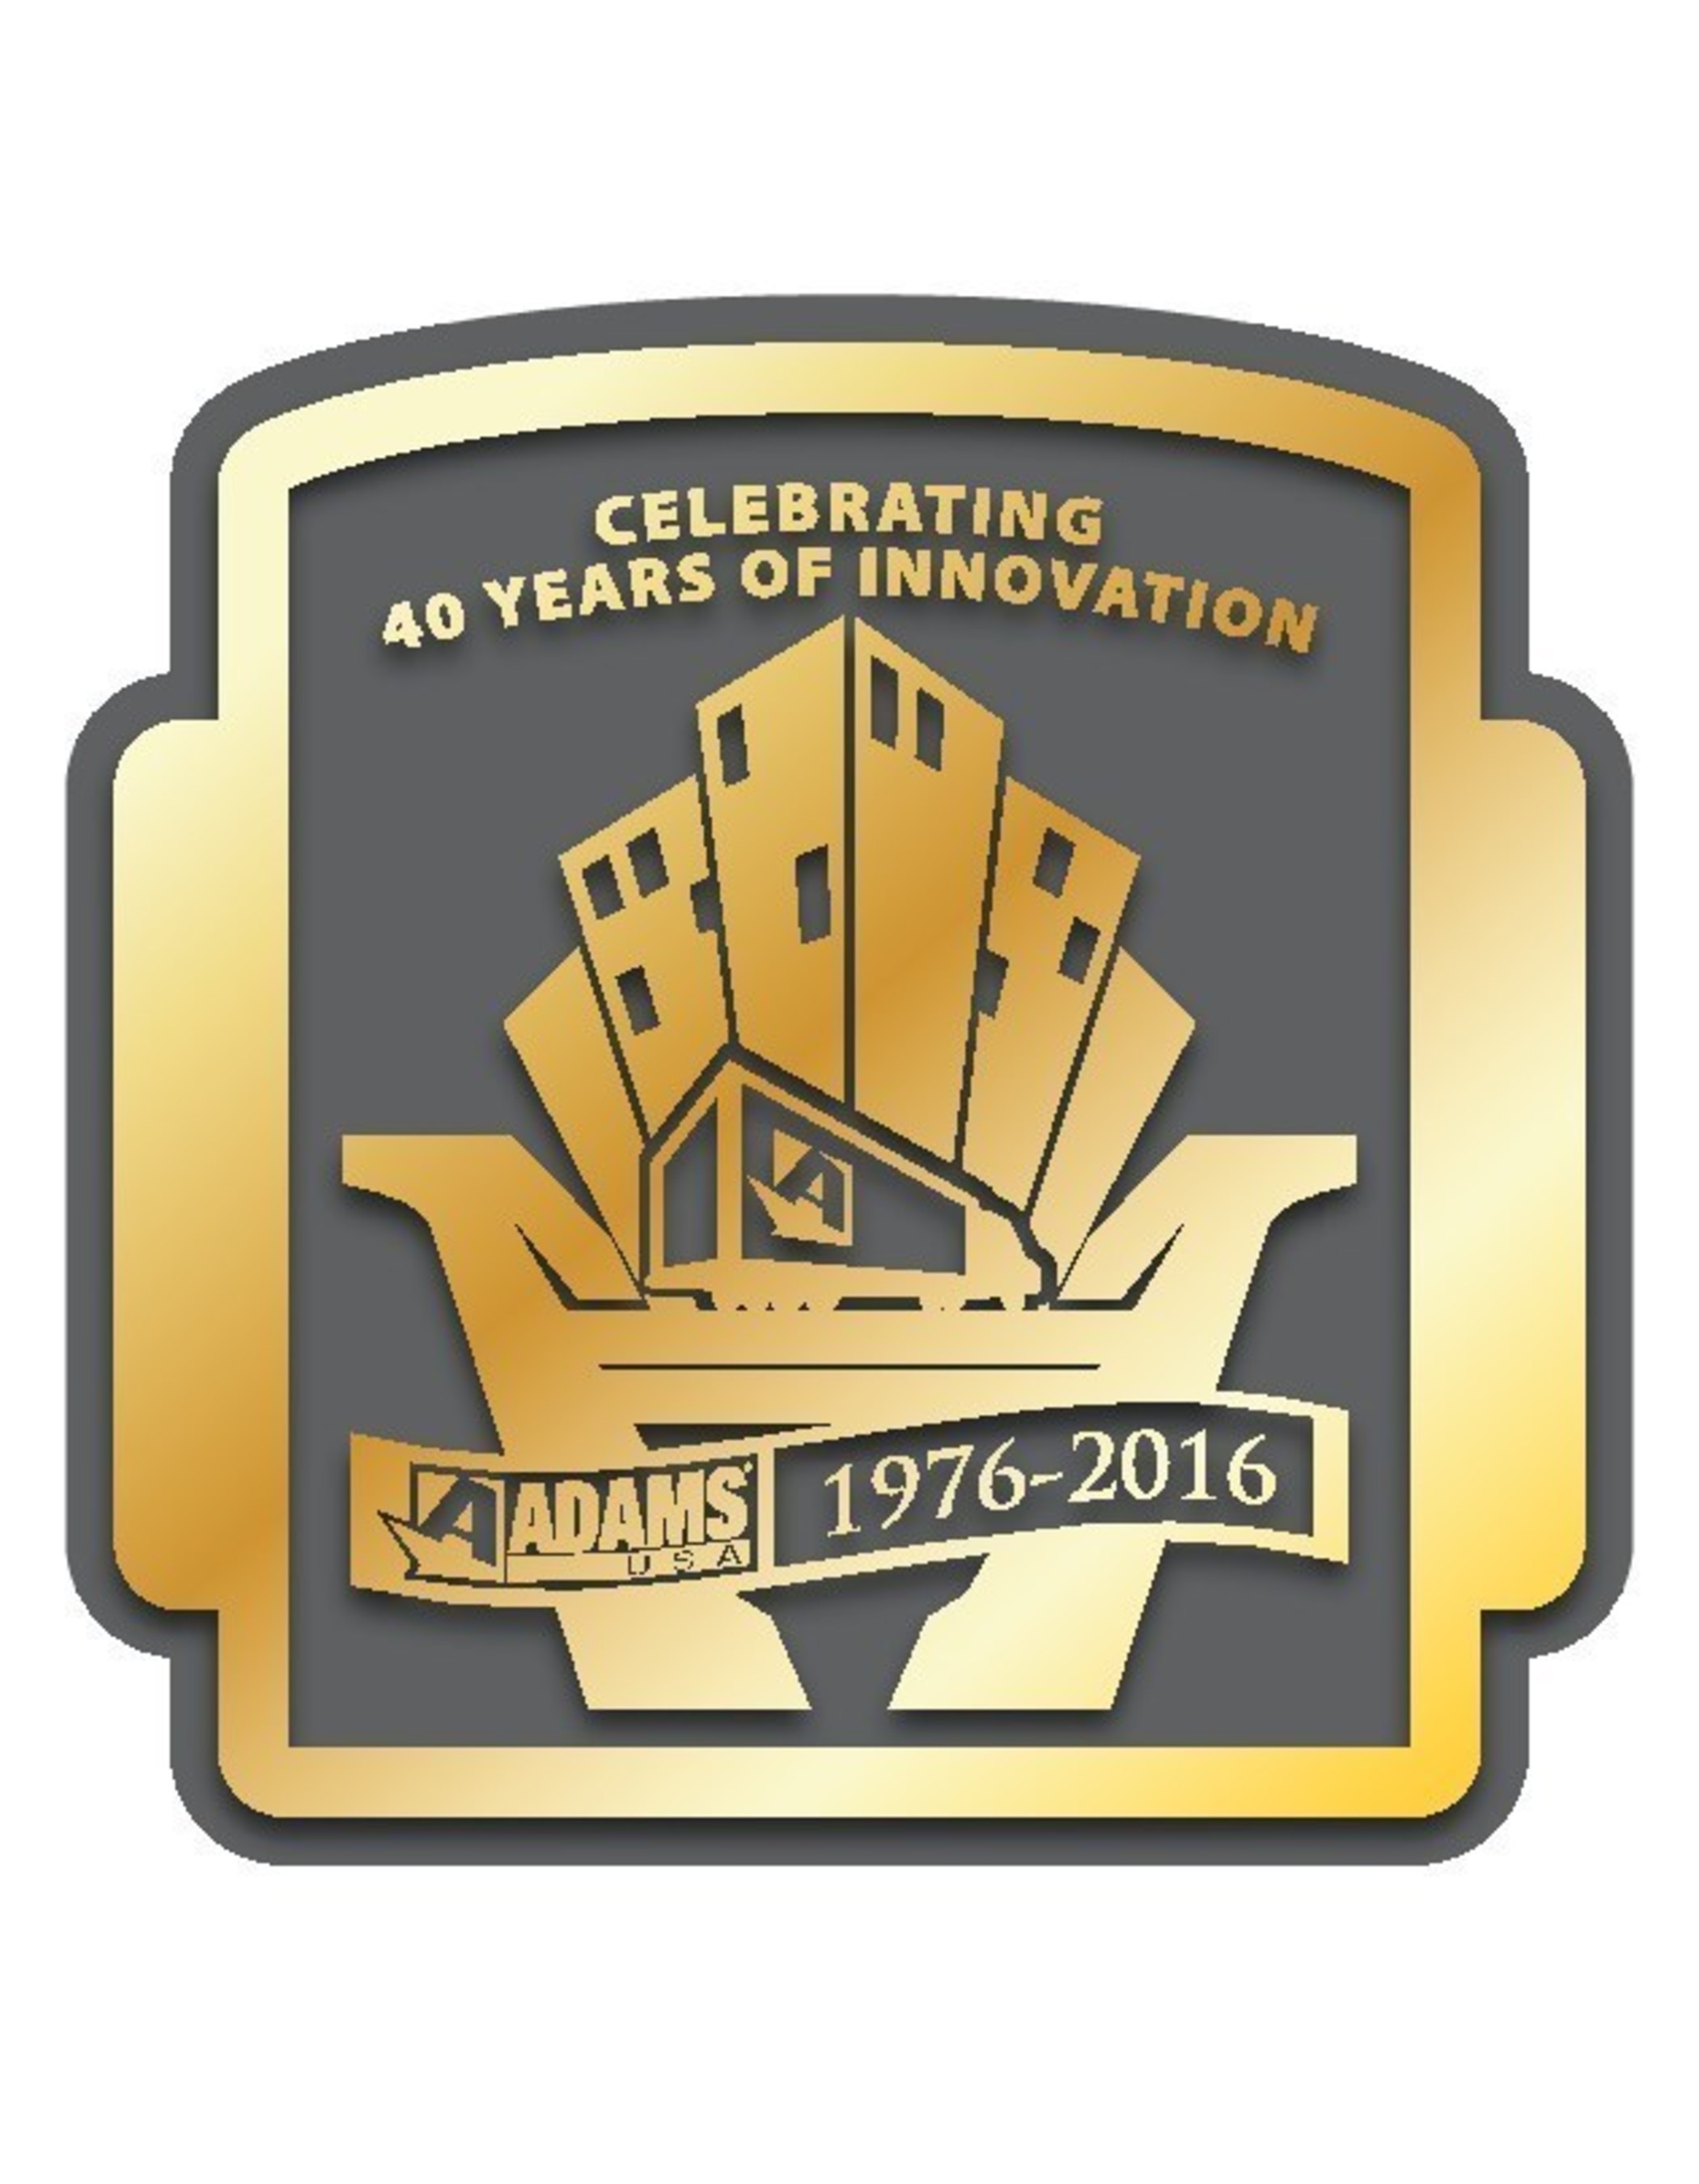 Adams Manufacturing Celebrates 40th Anniversary Milestone.